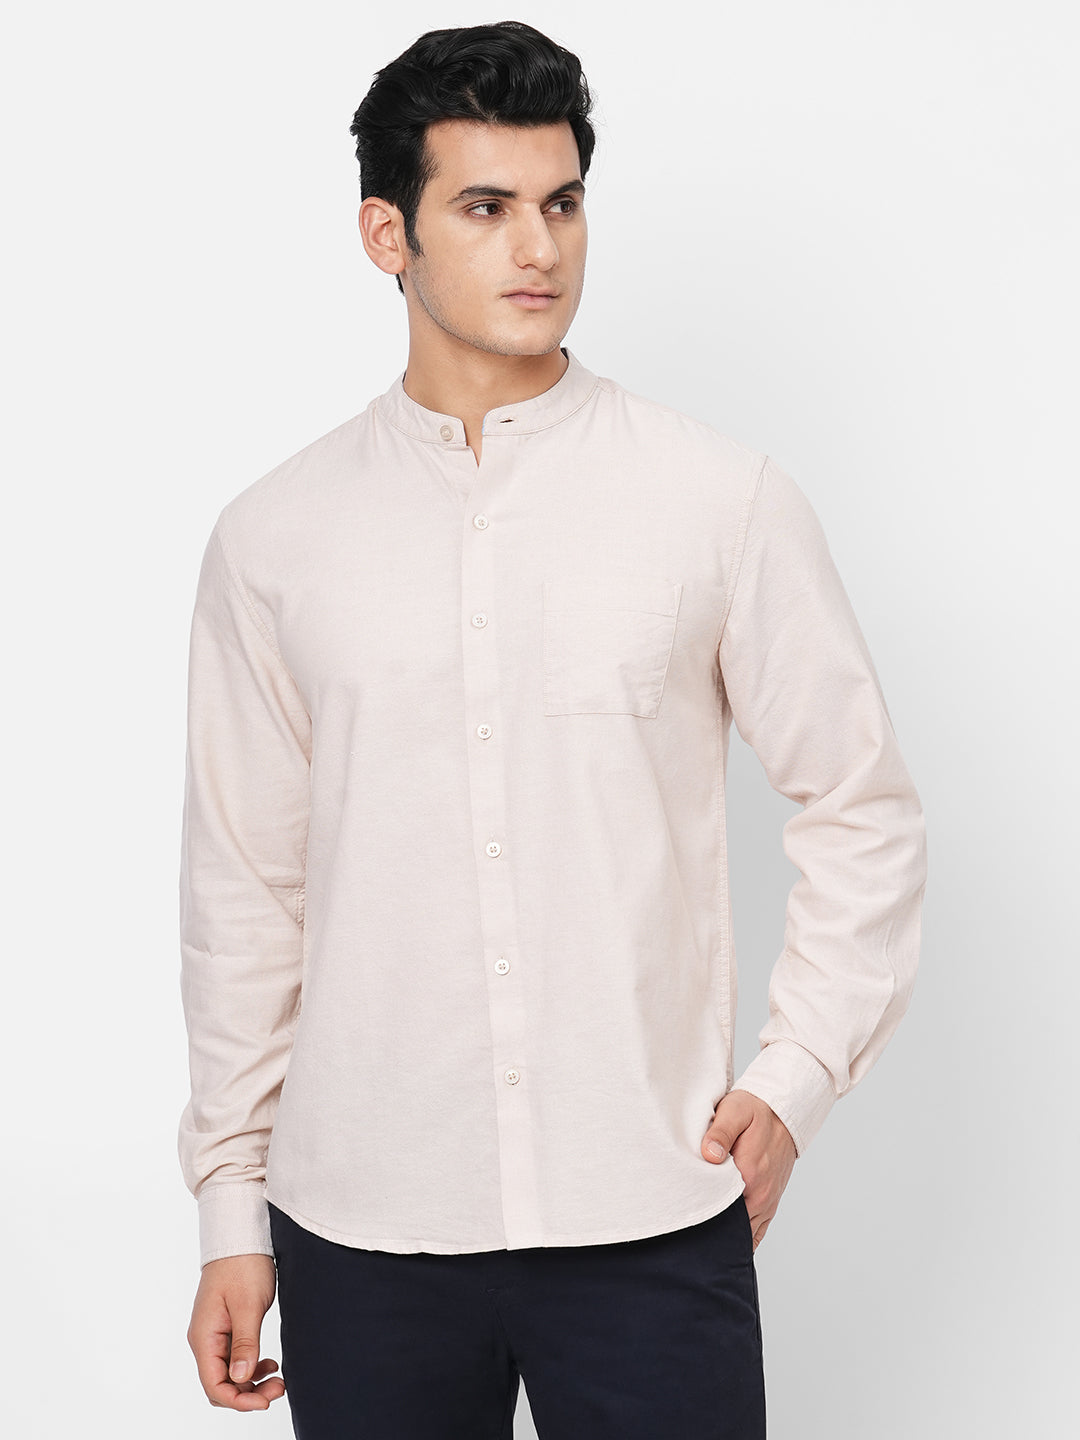 Men's Oxford Cotton Band Collar Long Sleeved Shirt - Khaki